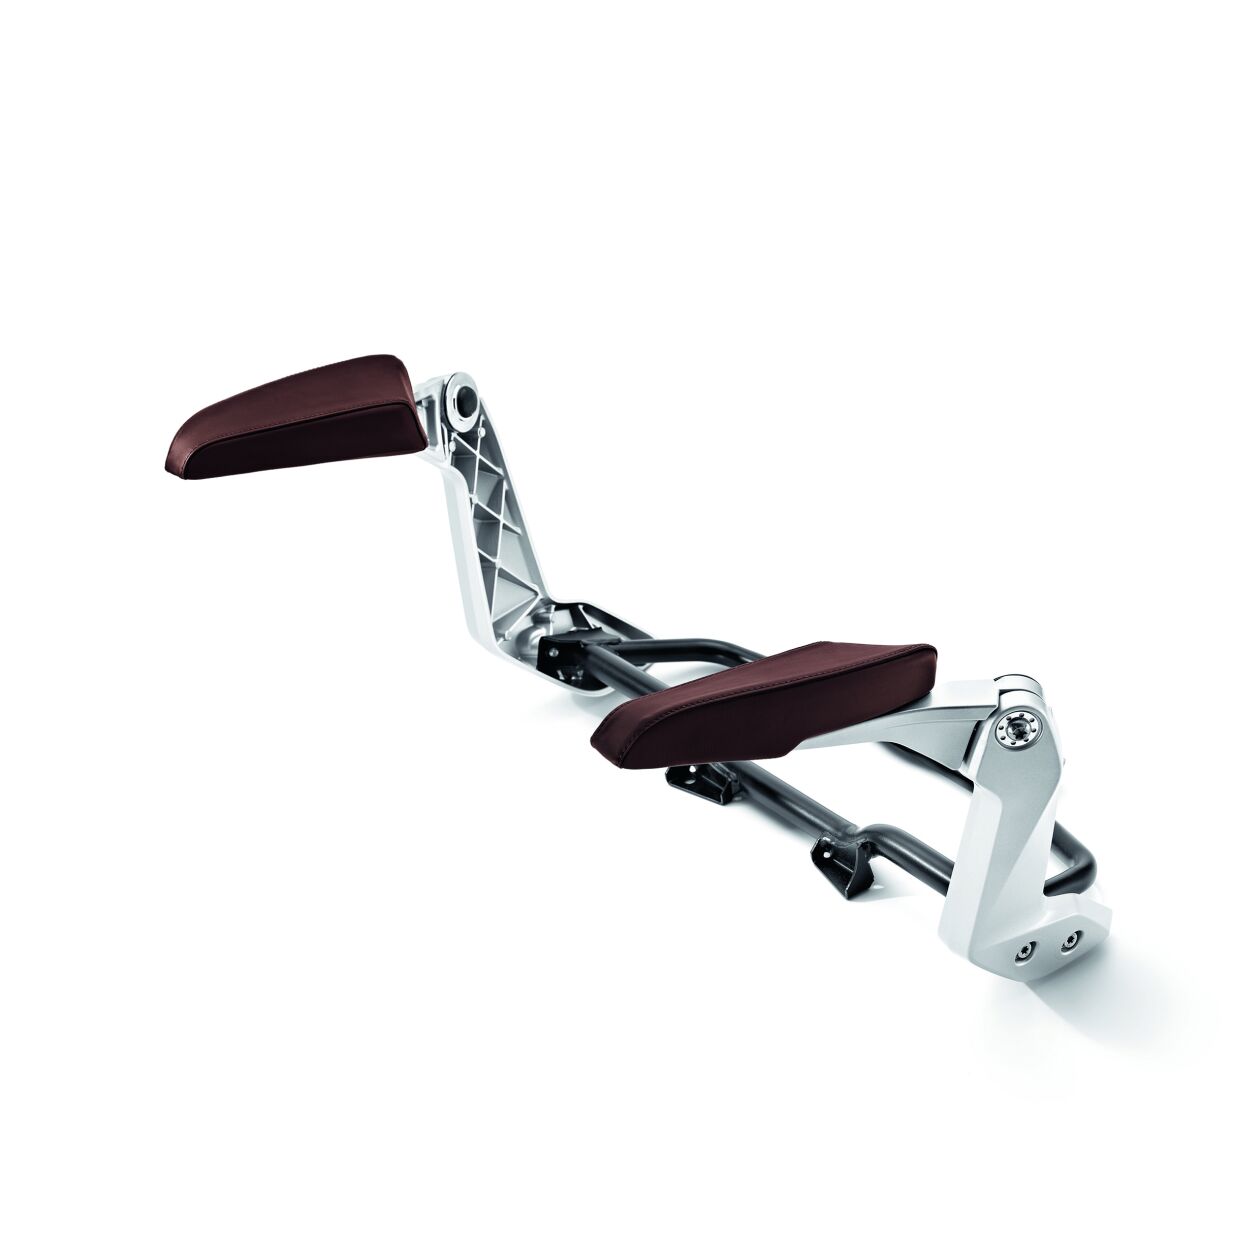 BMW Passenger Seat Comfort Armrest Padding Kit, Dark Brown (77251540814)